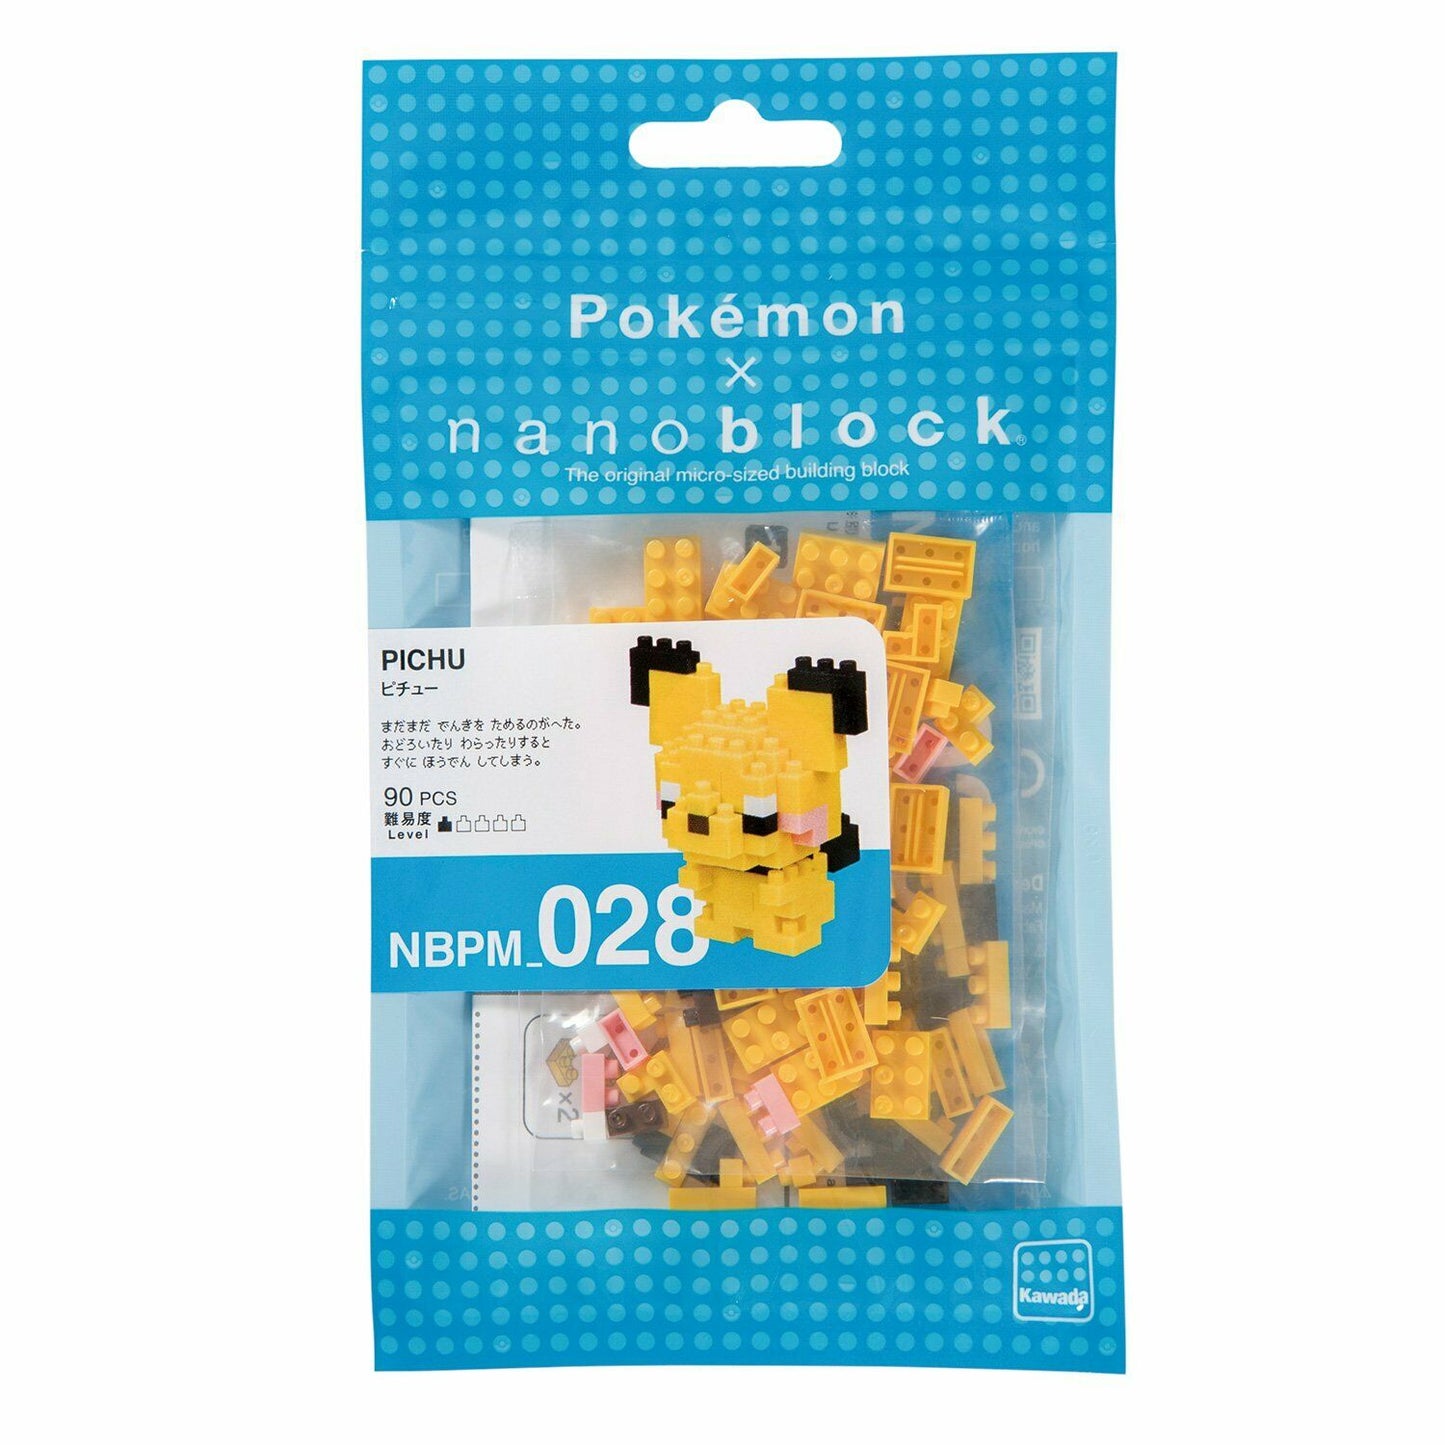 Nanoblock #028 Pokemon Pichu 90pcs